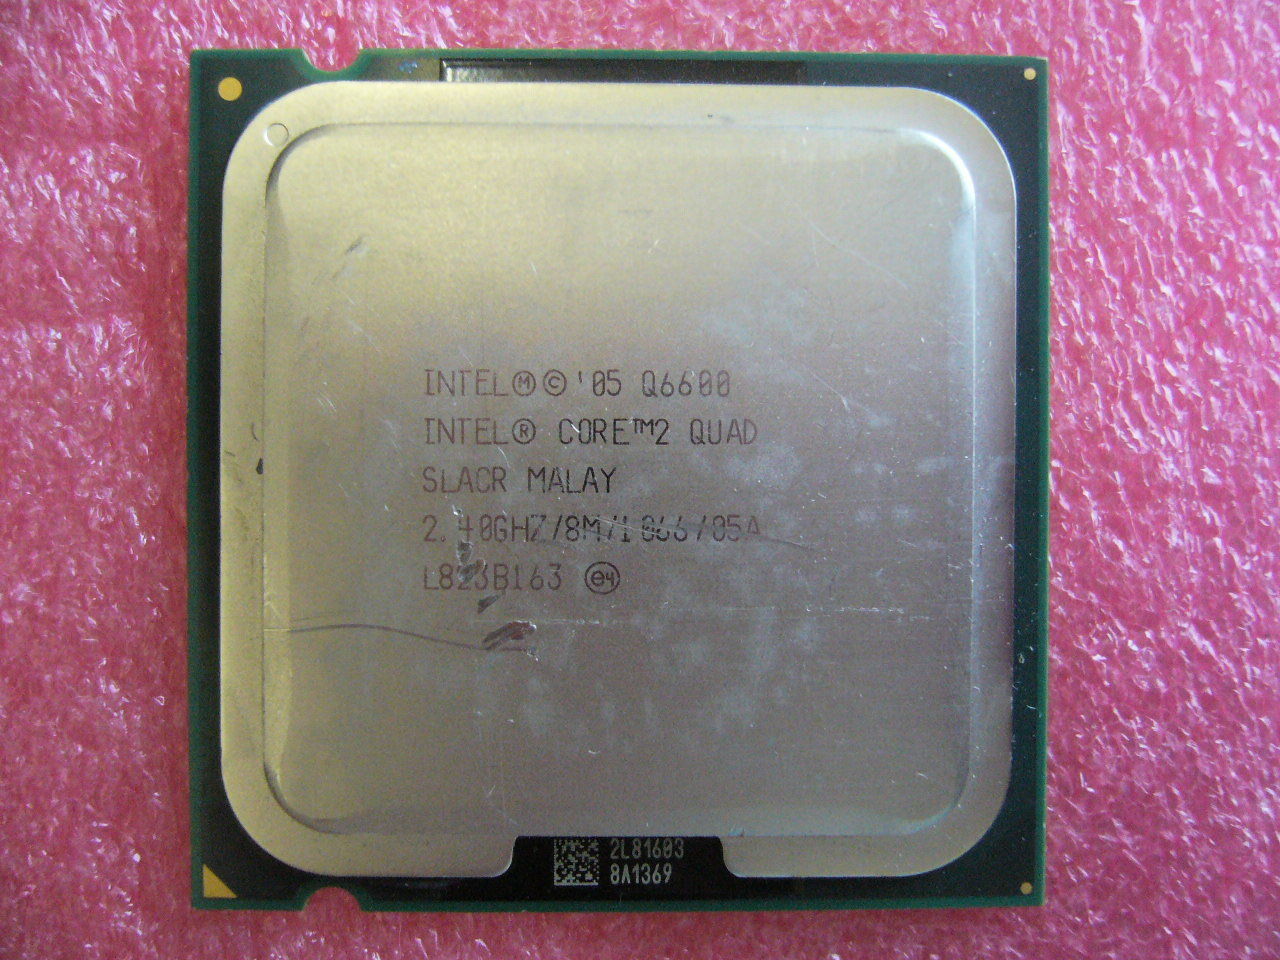 QTY 1x INTEL Core2 Quad Q6600 CPU 2.40GHz/8MB/1066Mhz LGA775 SLACR - Click Image to Close